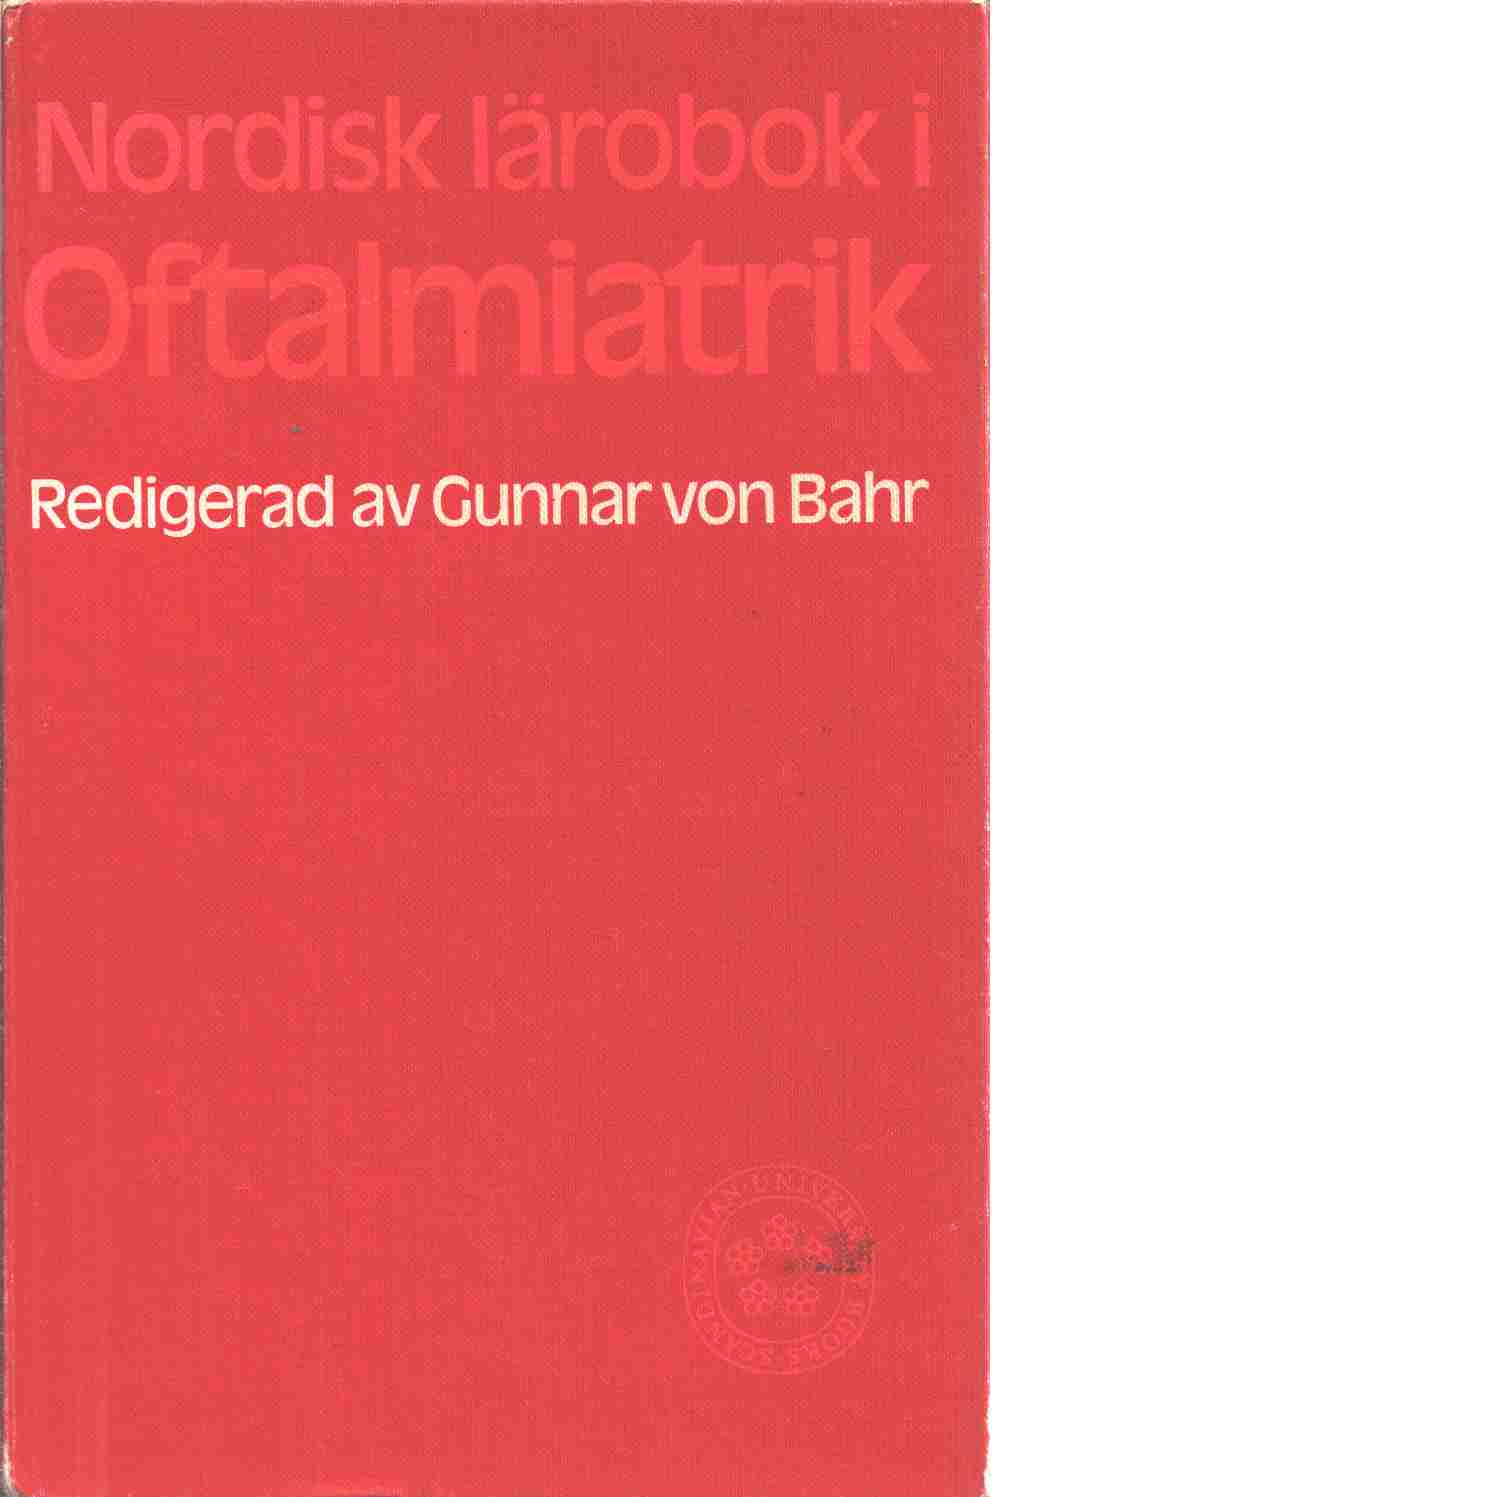 Nordisk lärobok i oftalmiatrik - Bahr, von Gunnar